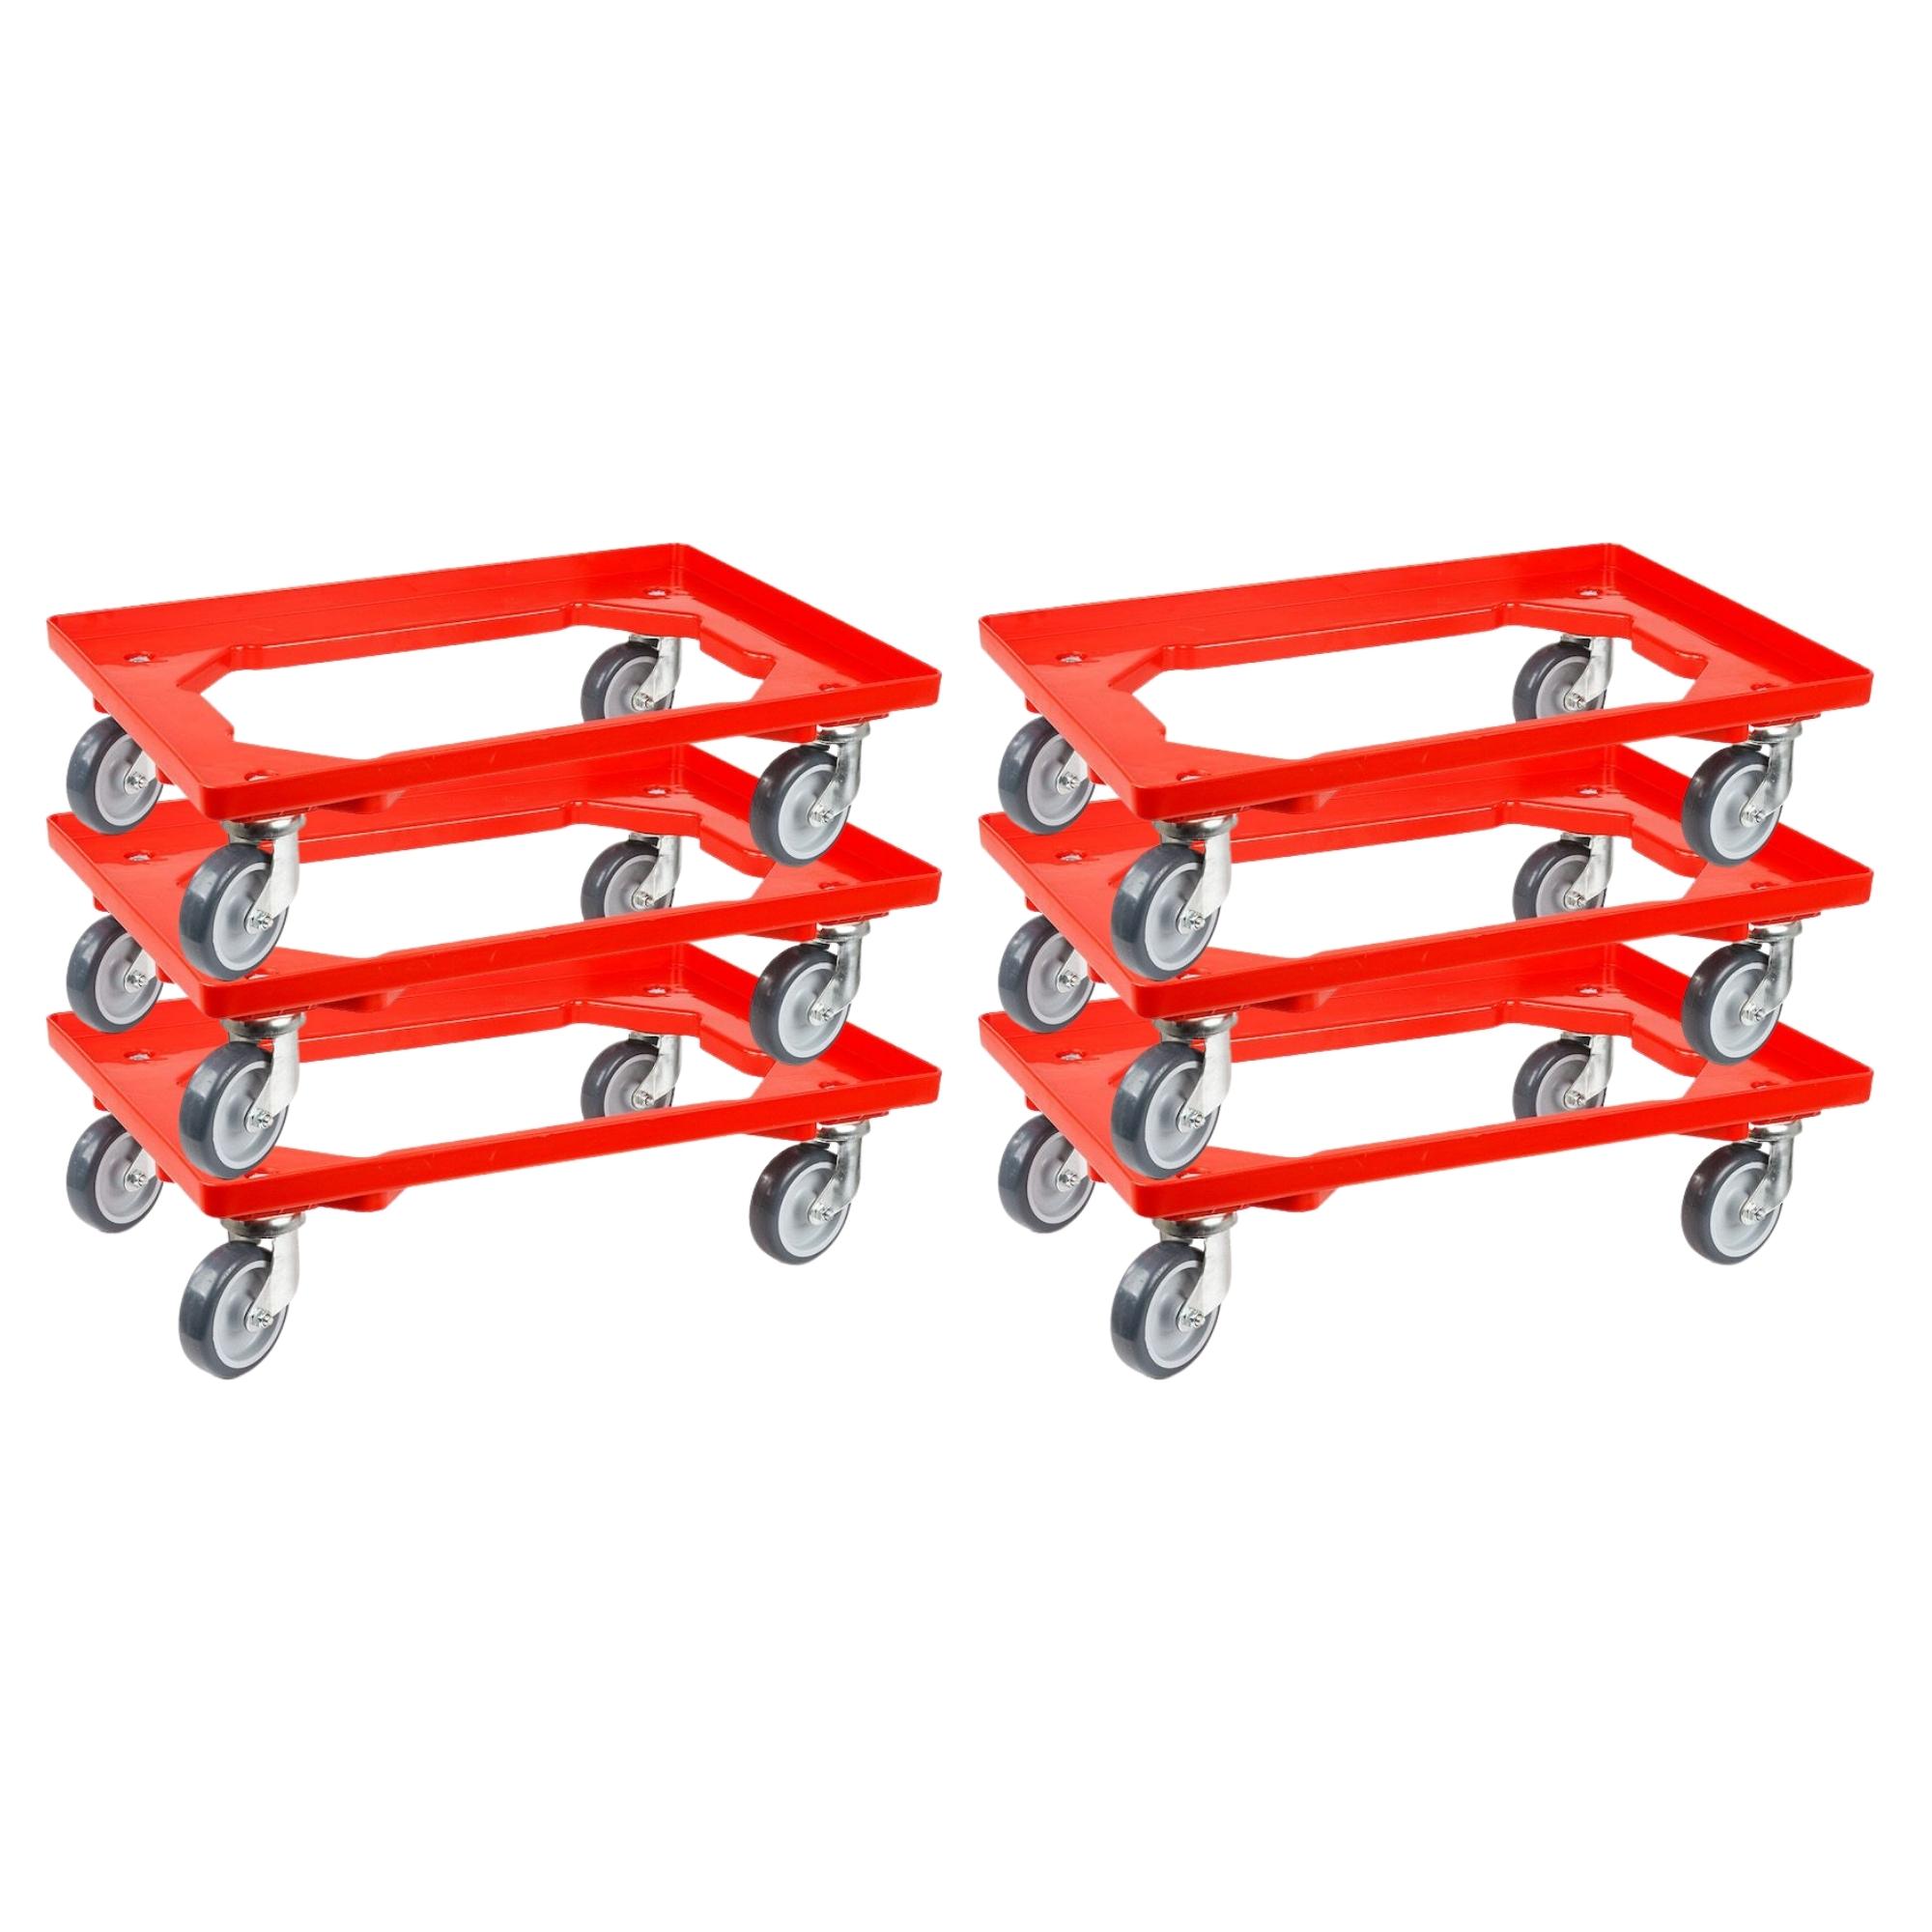 SparSet 6x Transportroller für Euroboxen 60x40cm mit Gummiräder rot | Offenes Deck | 4 Lenkrollen | Traglast 300kg | Kistenroller Logistikroller Rollwagen Profi-Fahrgestell